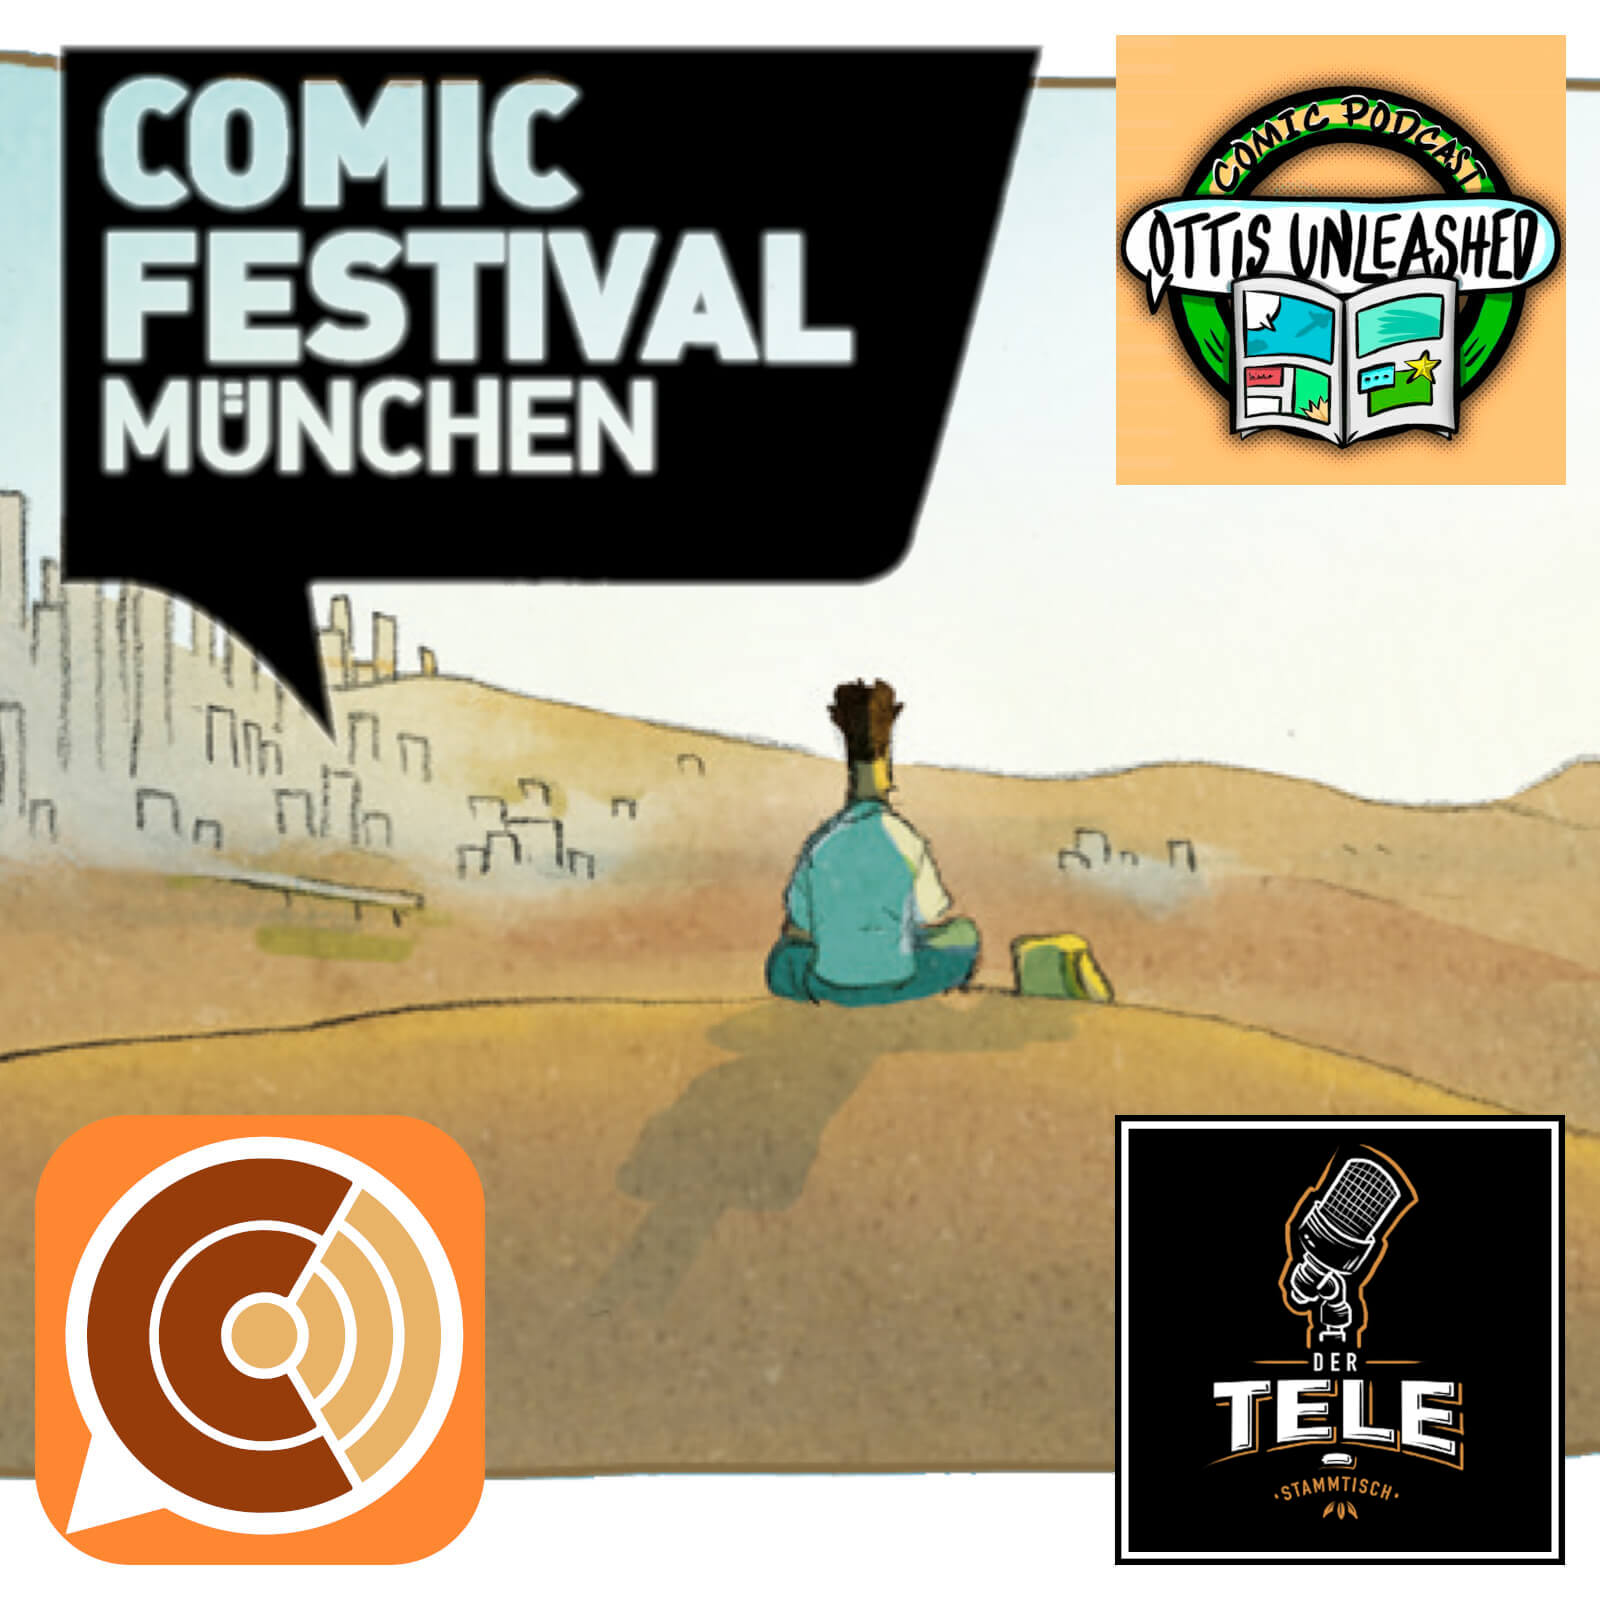 TST082 - Comicfestival München 2023, Temple of Refuge, Ottis Unleashed